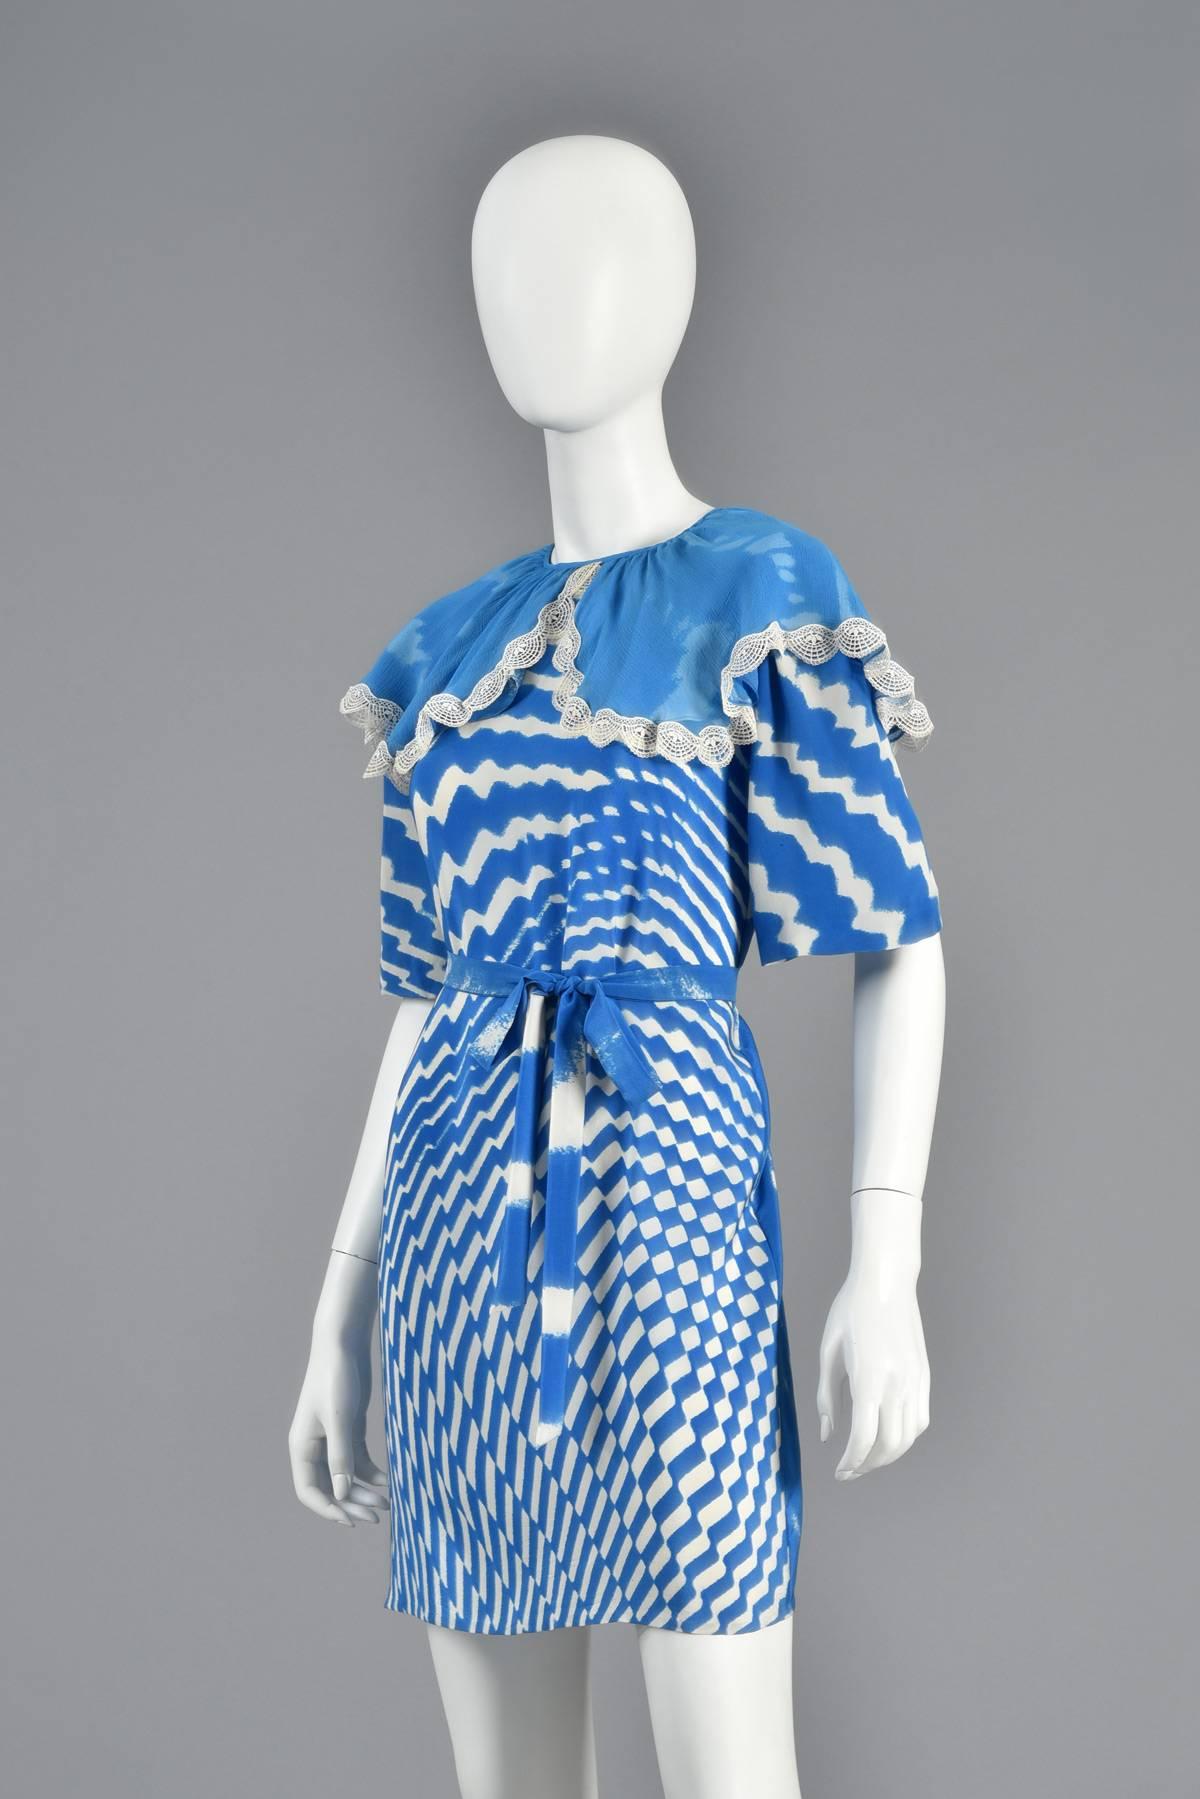 Thea Porter Couture Op Art Mini Dress For Sale 2